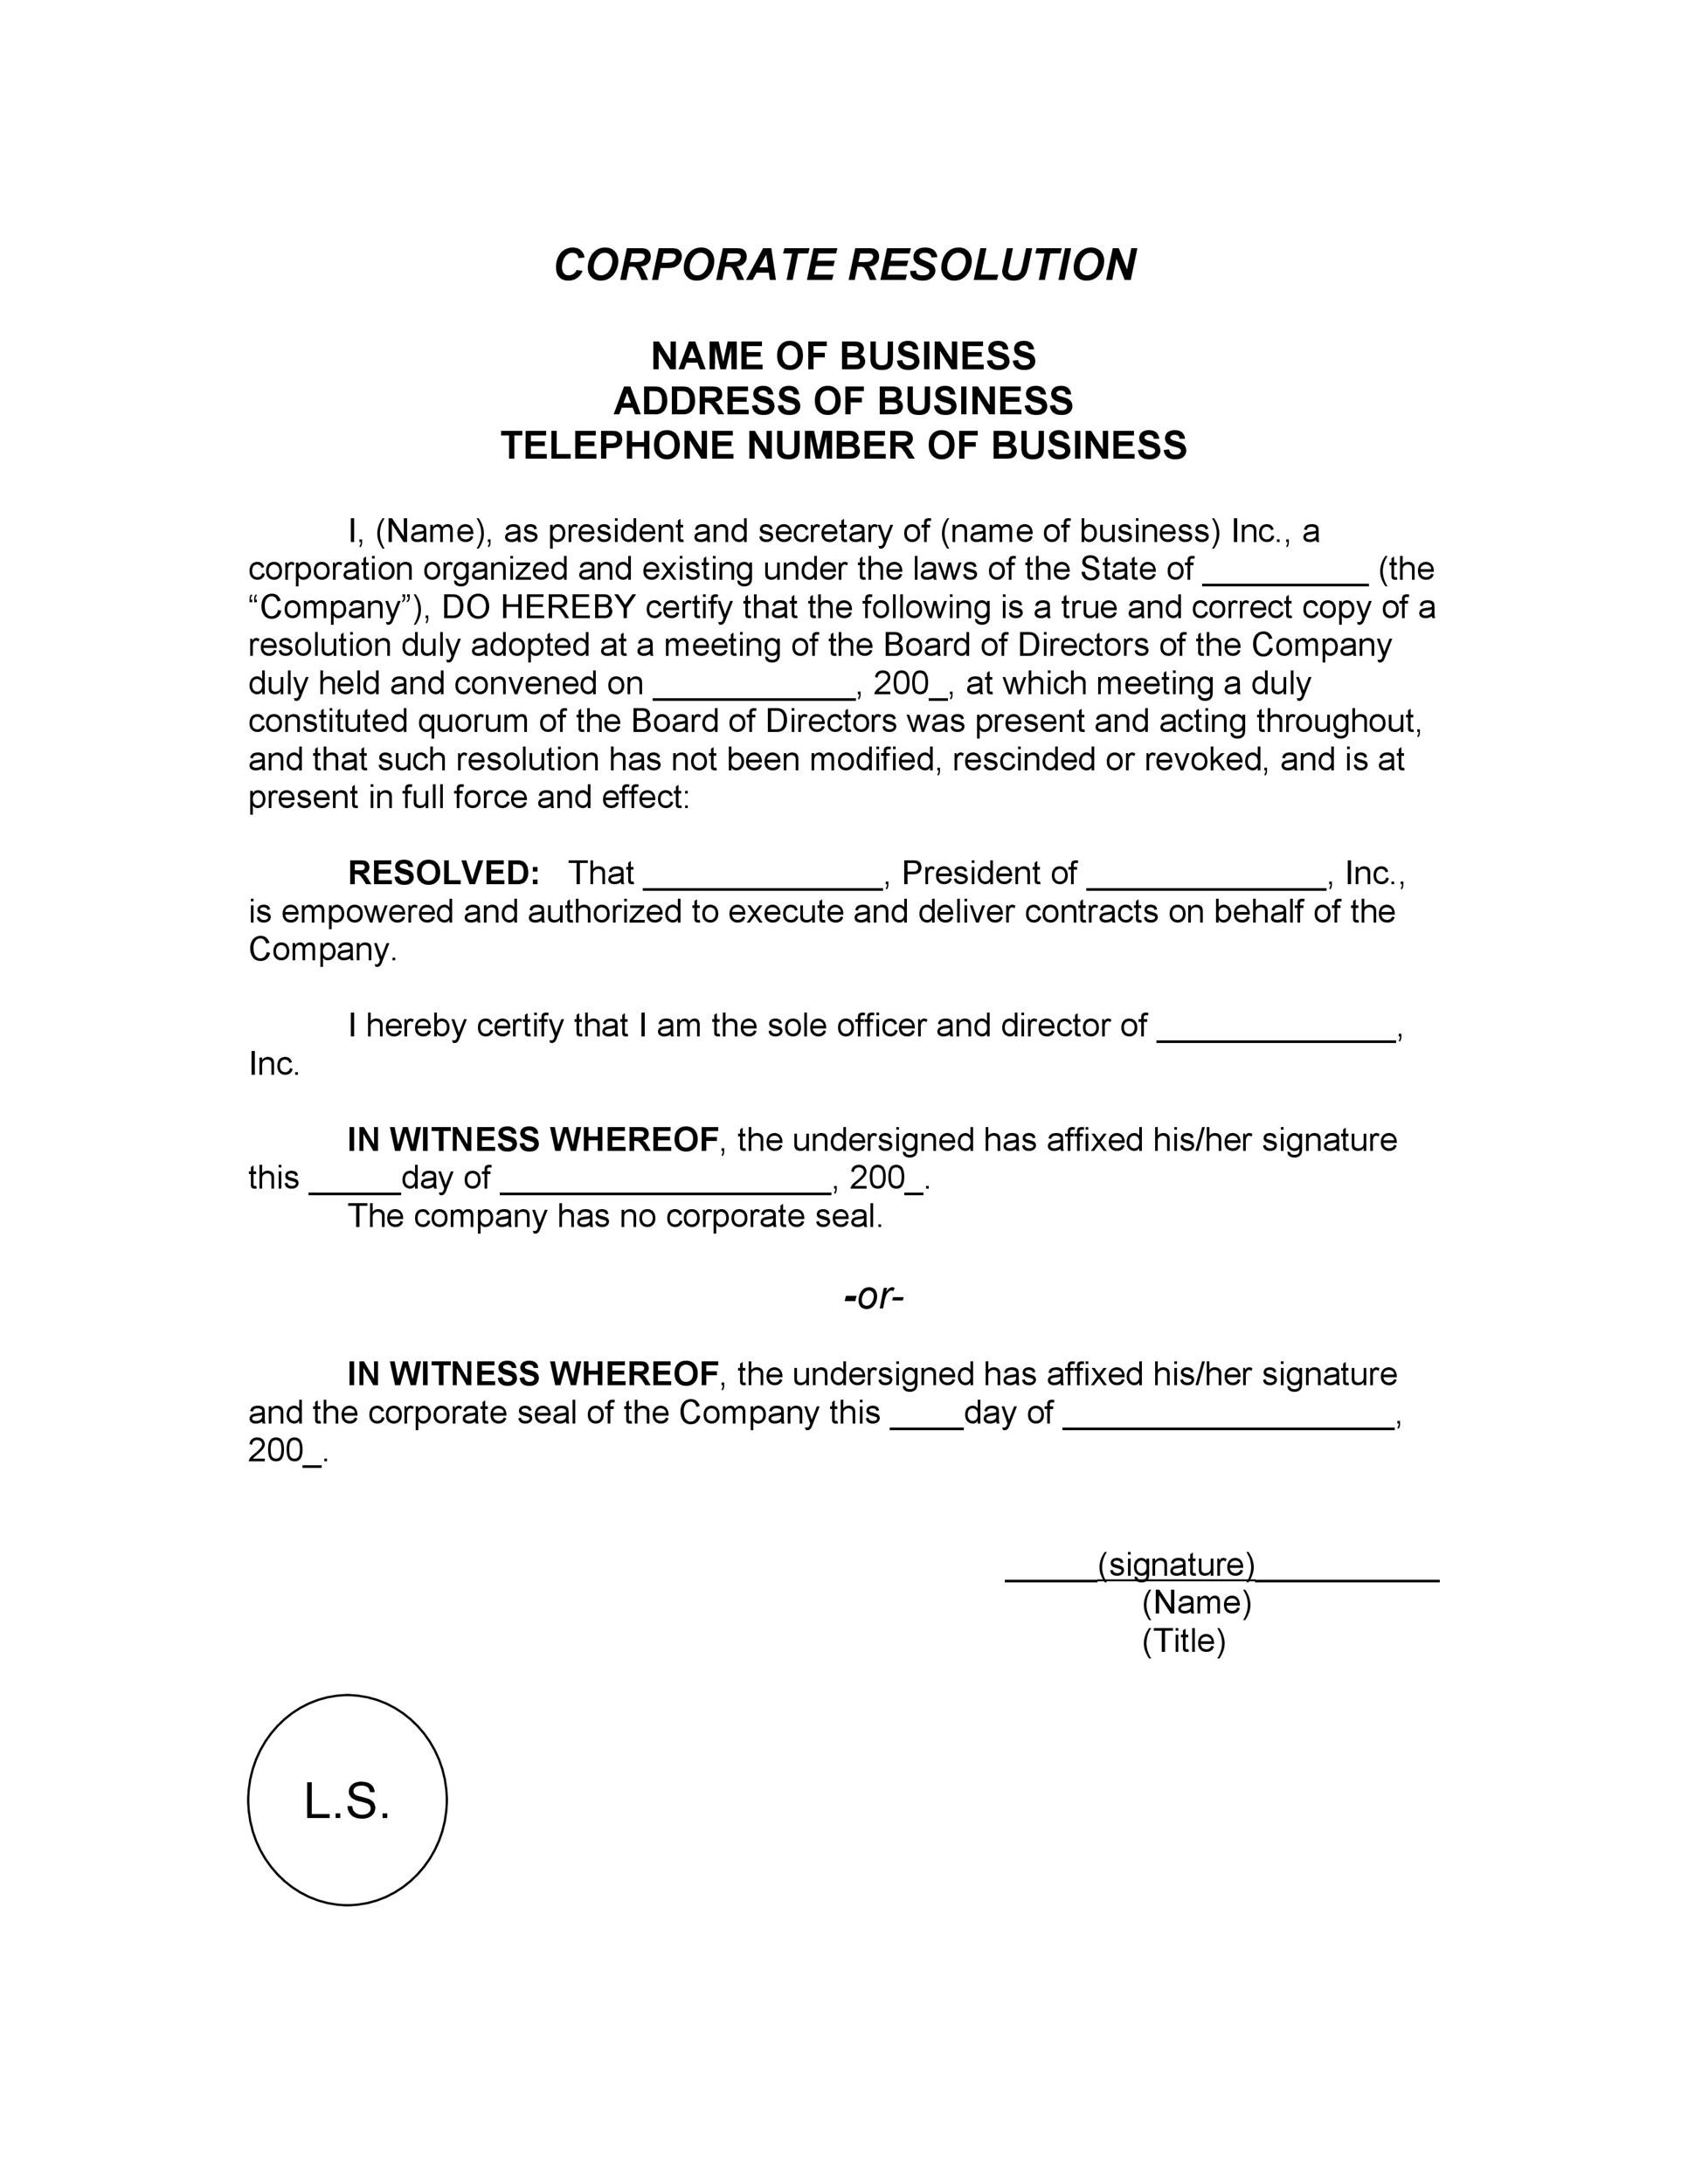 37-printable-corporate-resolution-forms-templatelab